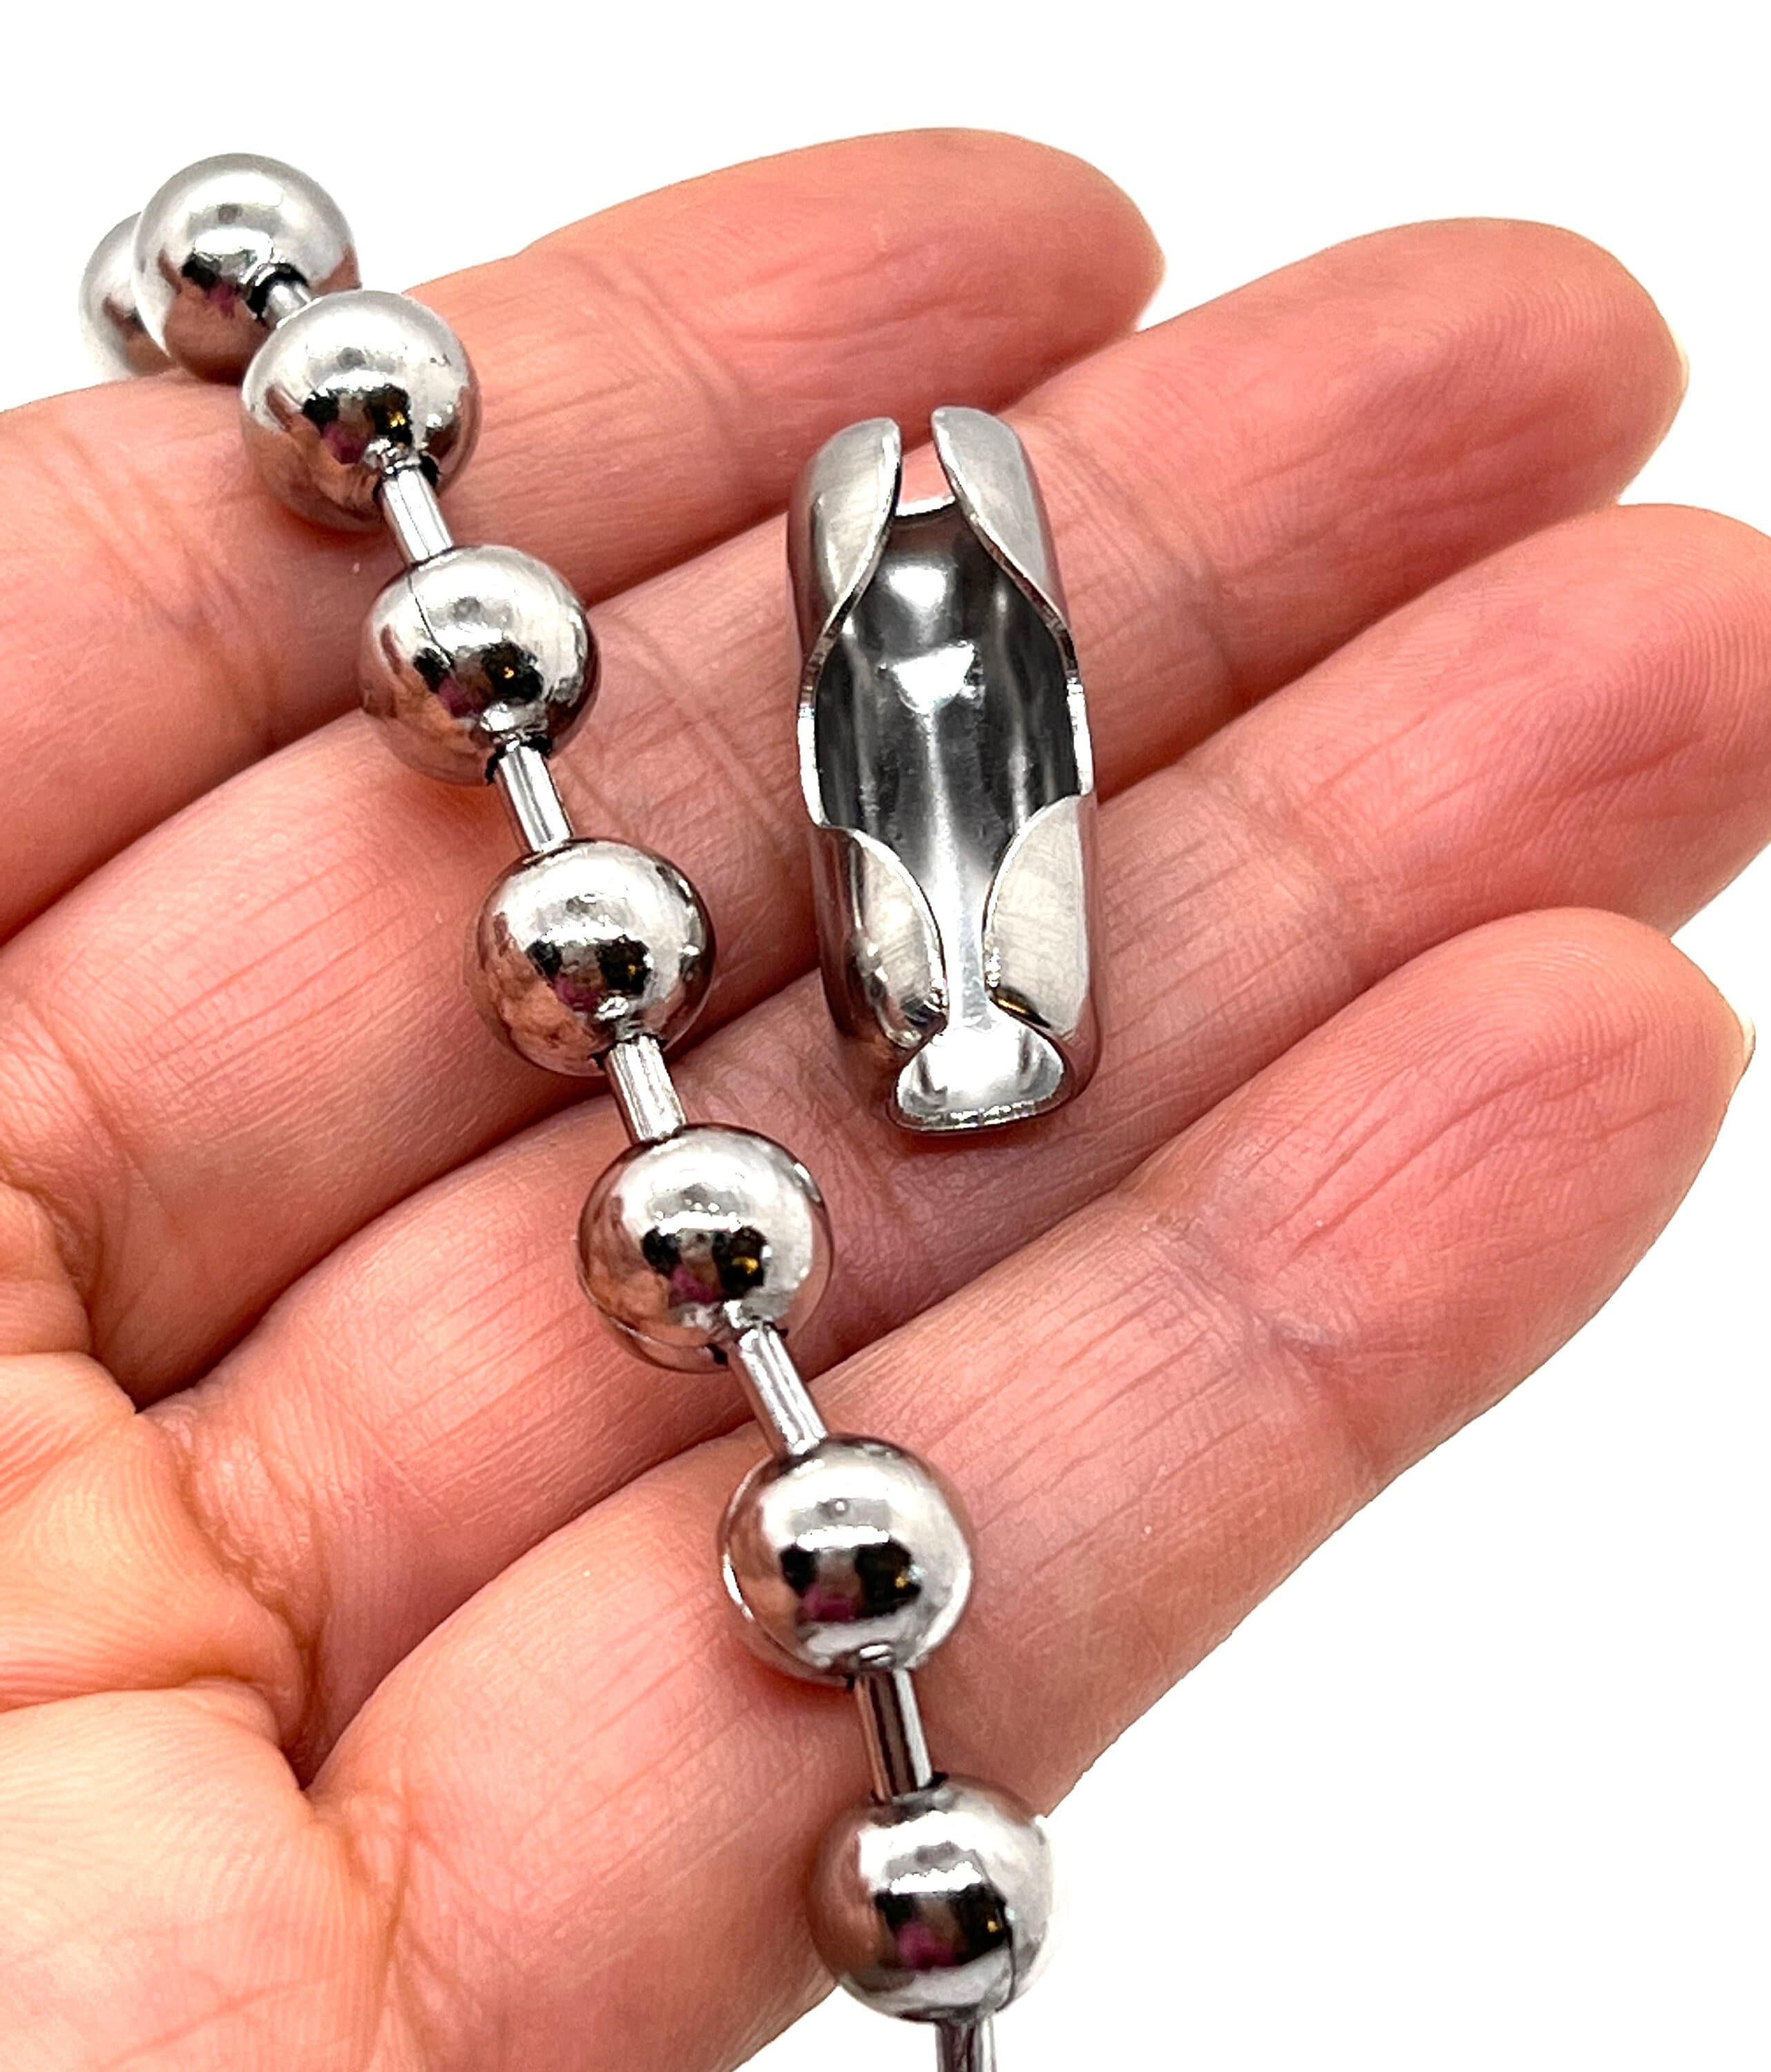 Nunn Design Silver Plated Ball Chain Connector for 1.8mm & 2.4mm Ball Chain (10)